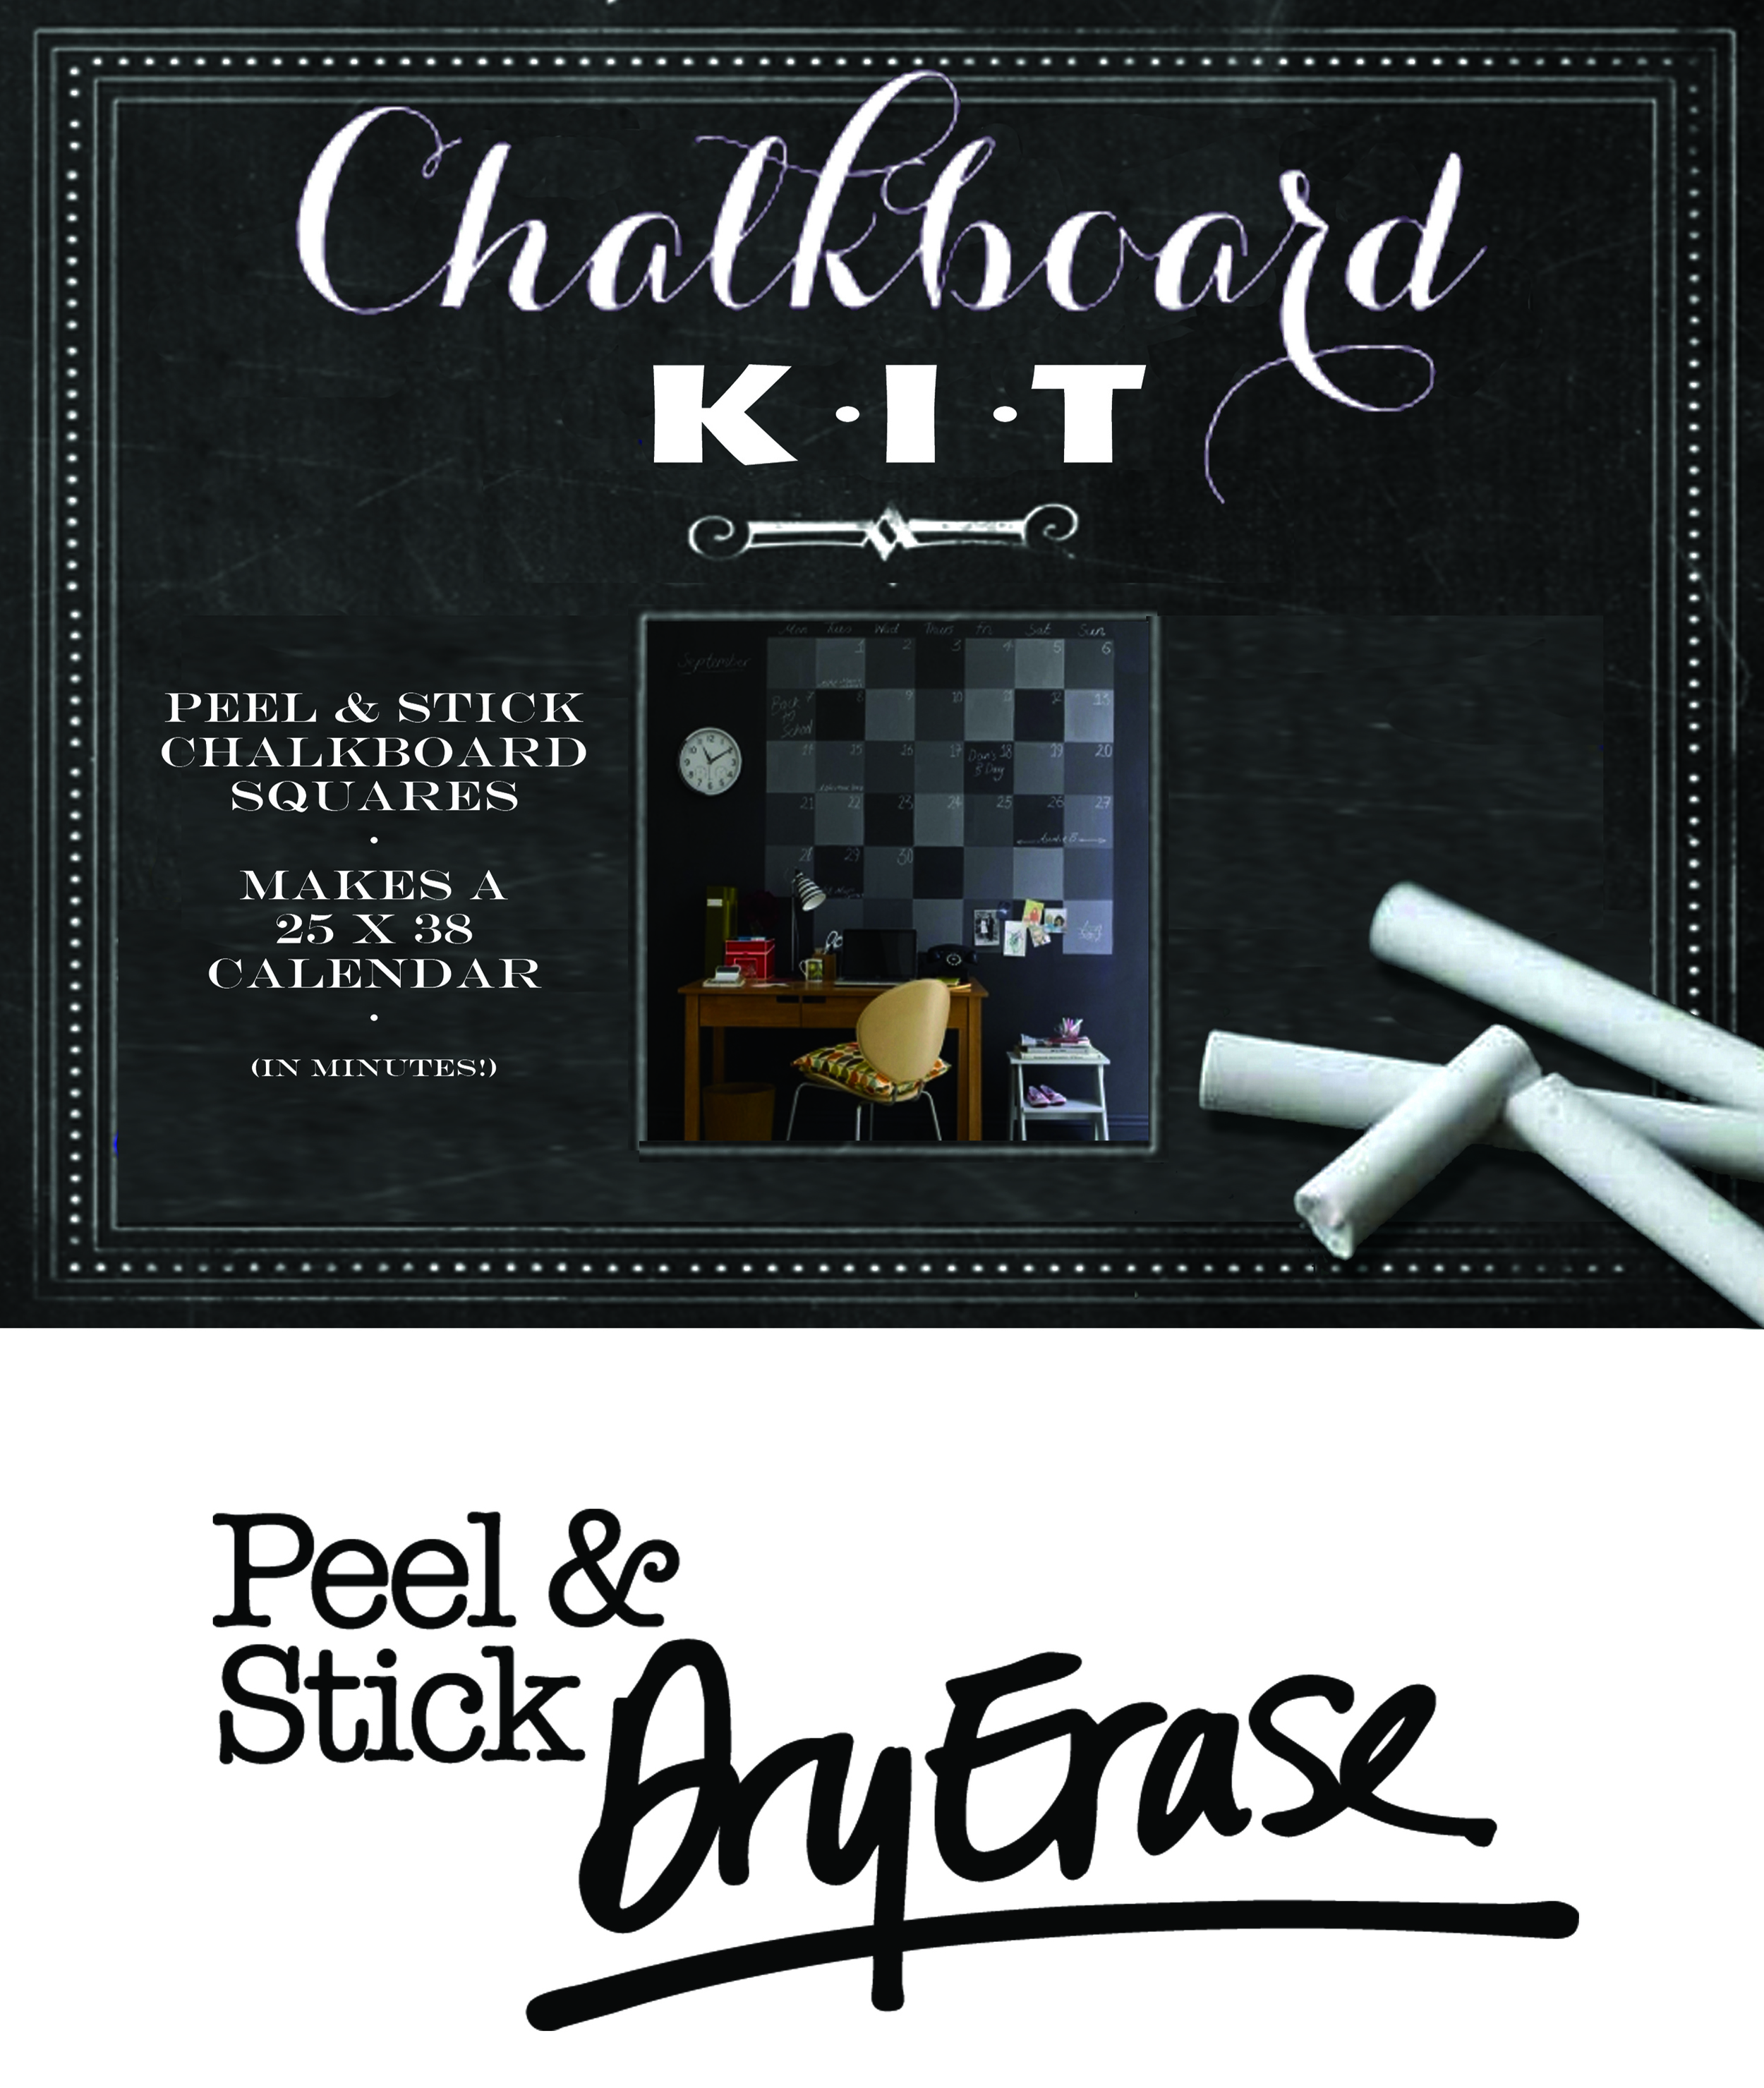 chalkboard kit _dry erase logo.jpg